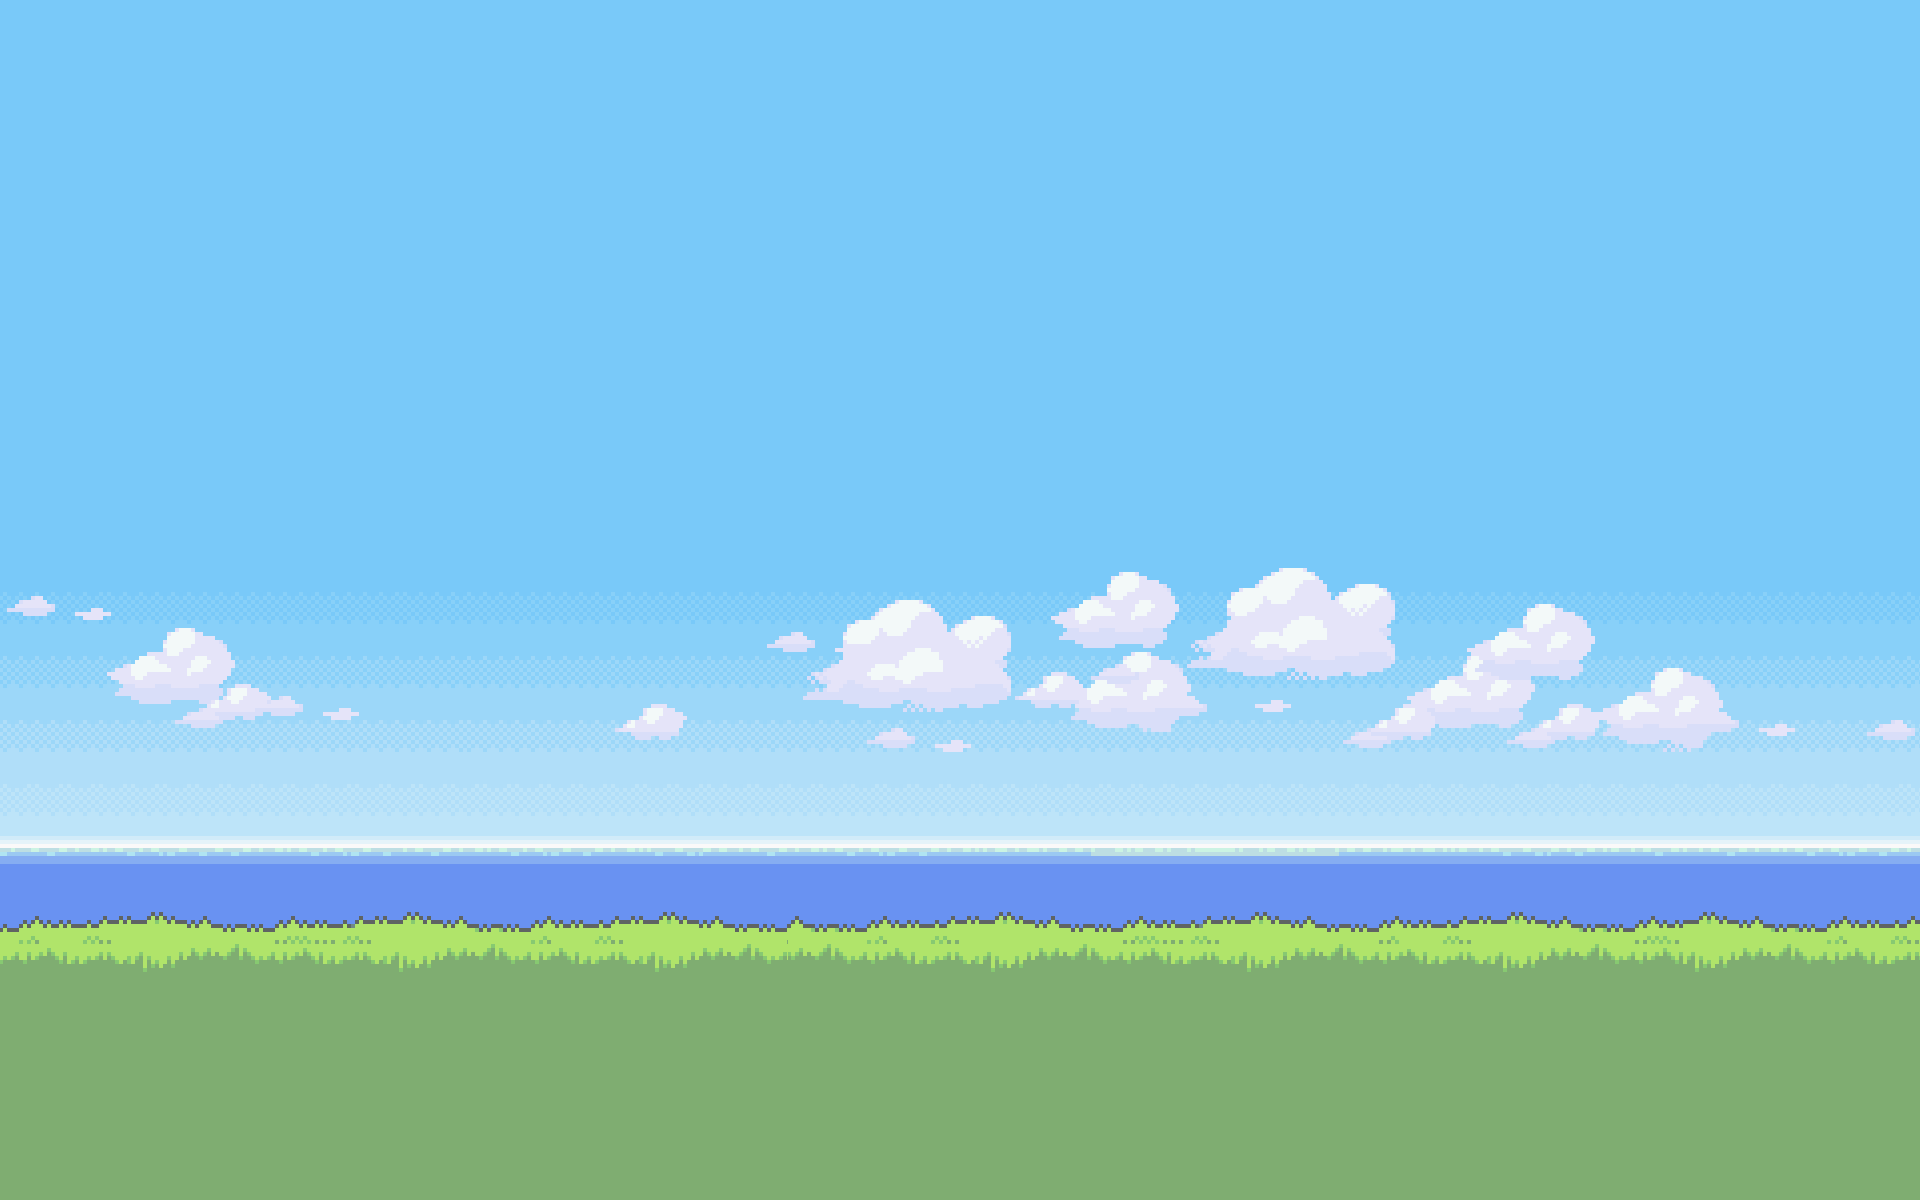 pokemon clouds pixel art #9I3Q